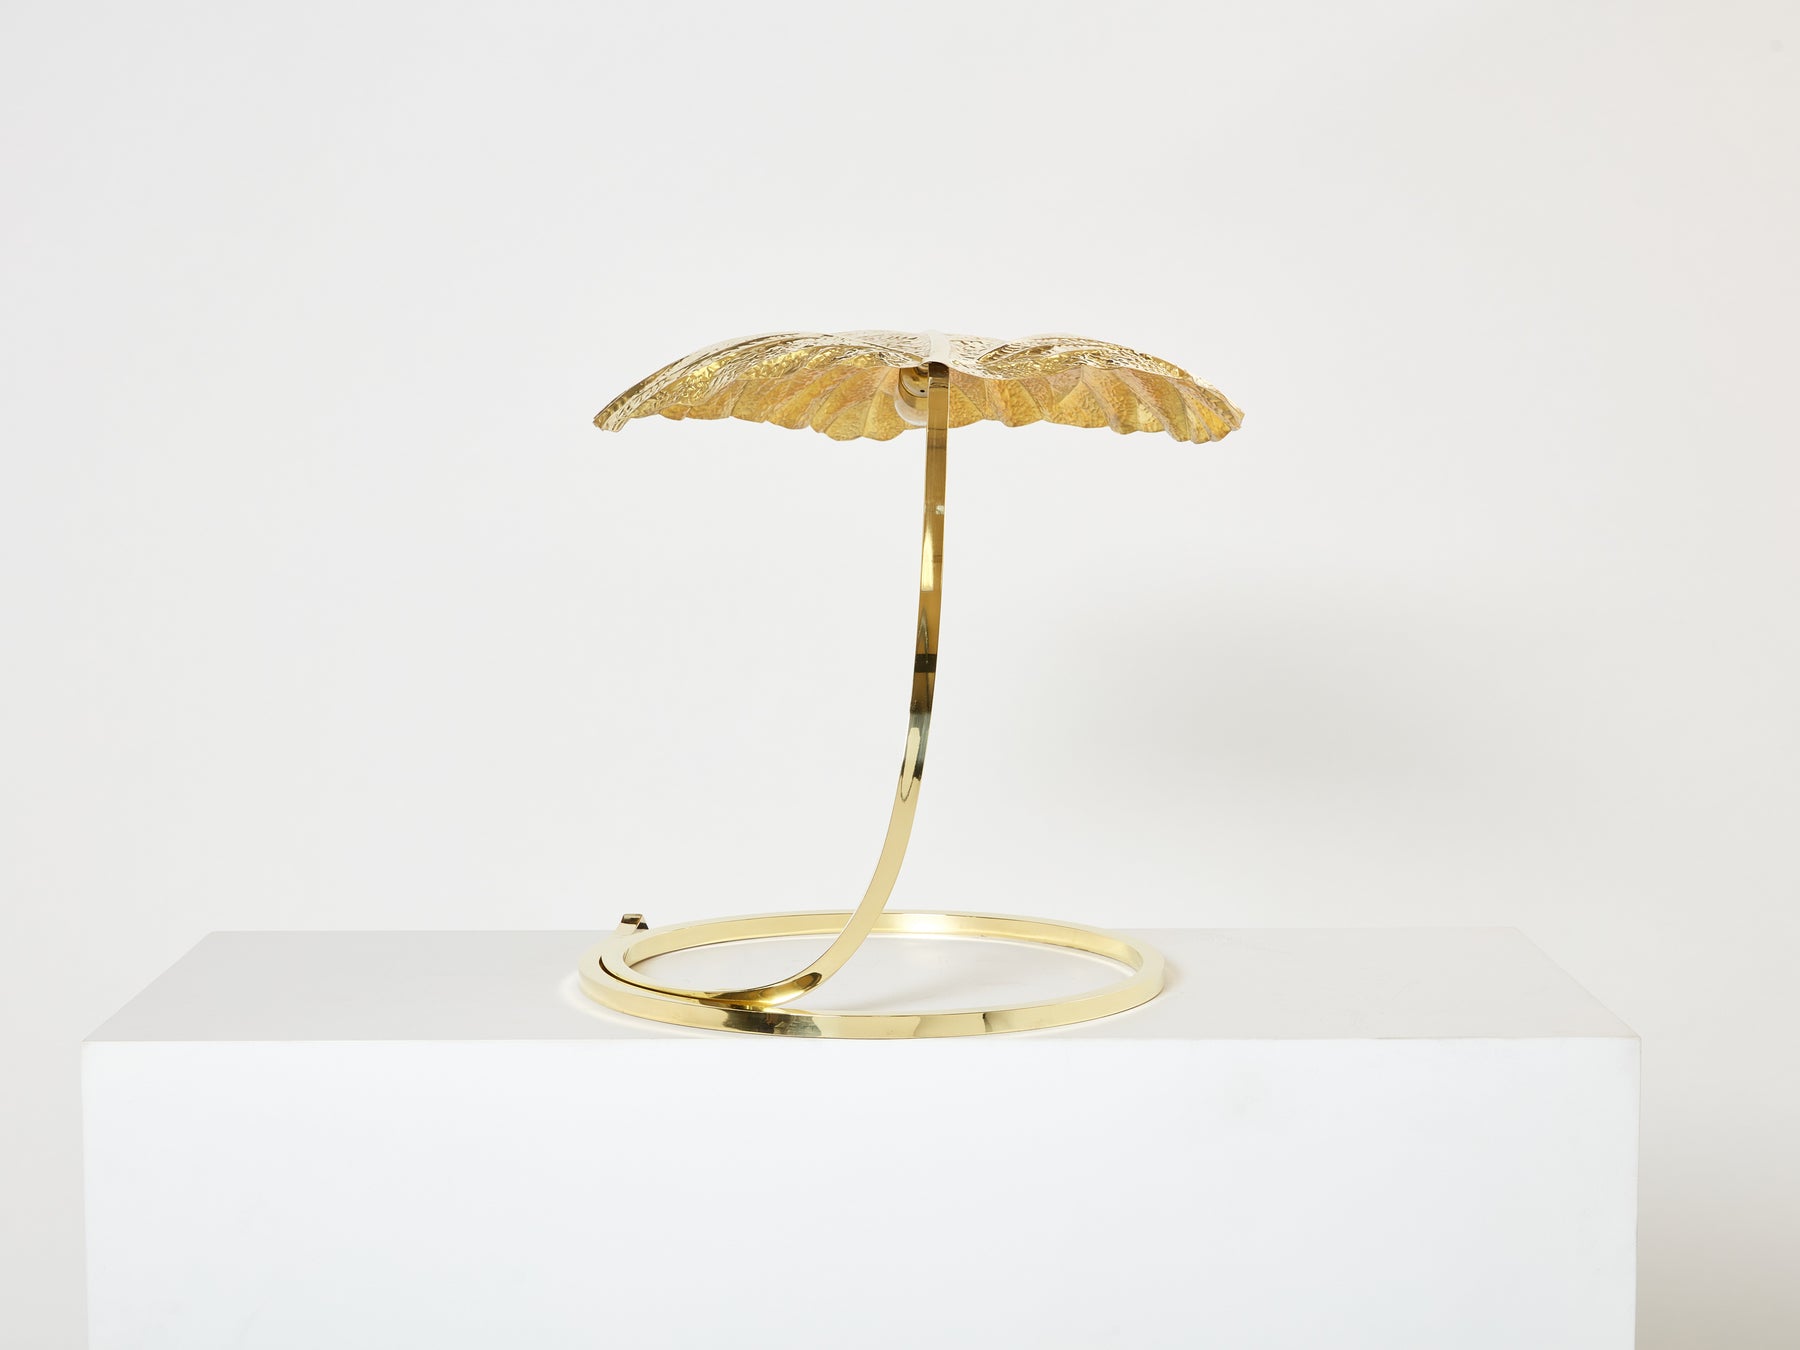 Tommaso Barbi for Bottega Gadda Rhubarb brass table lamp 1970s